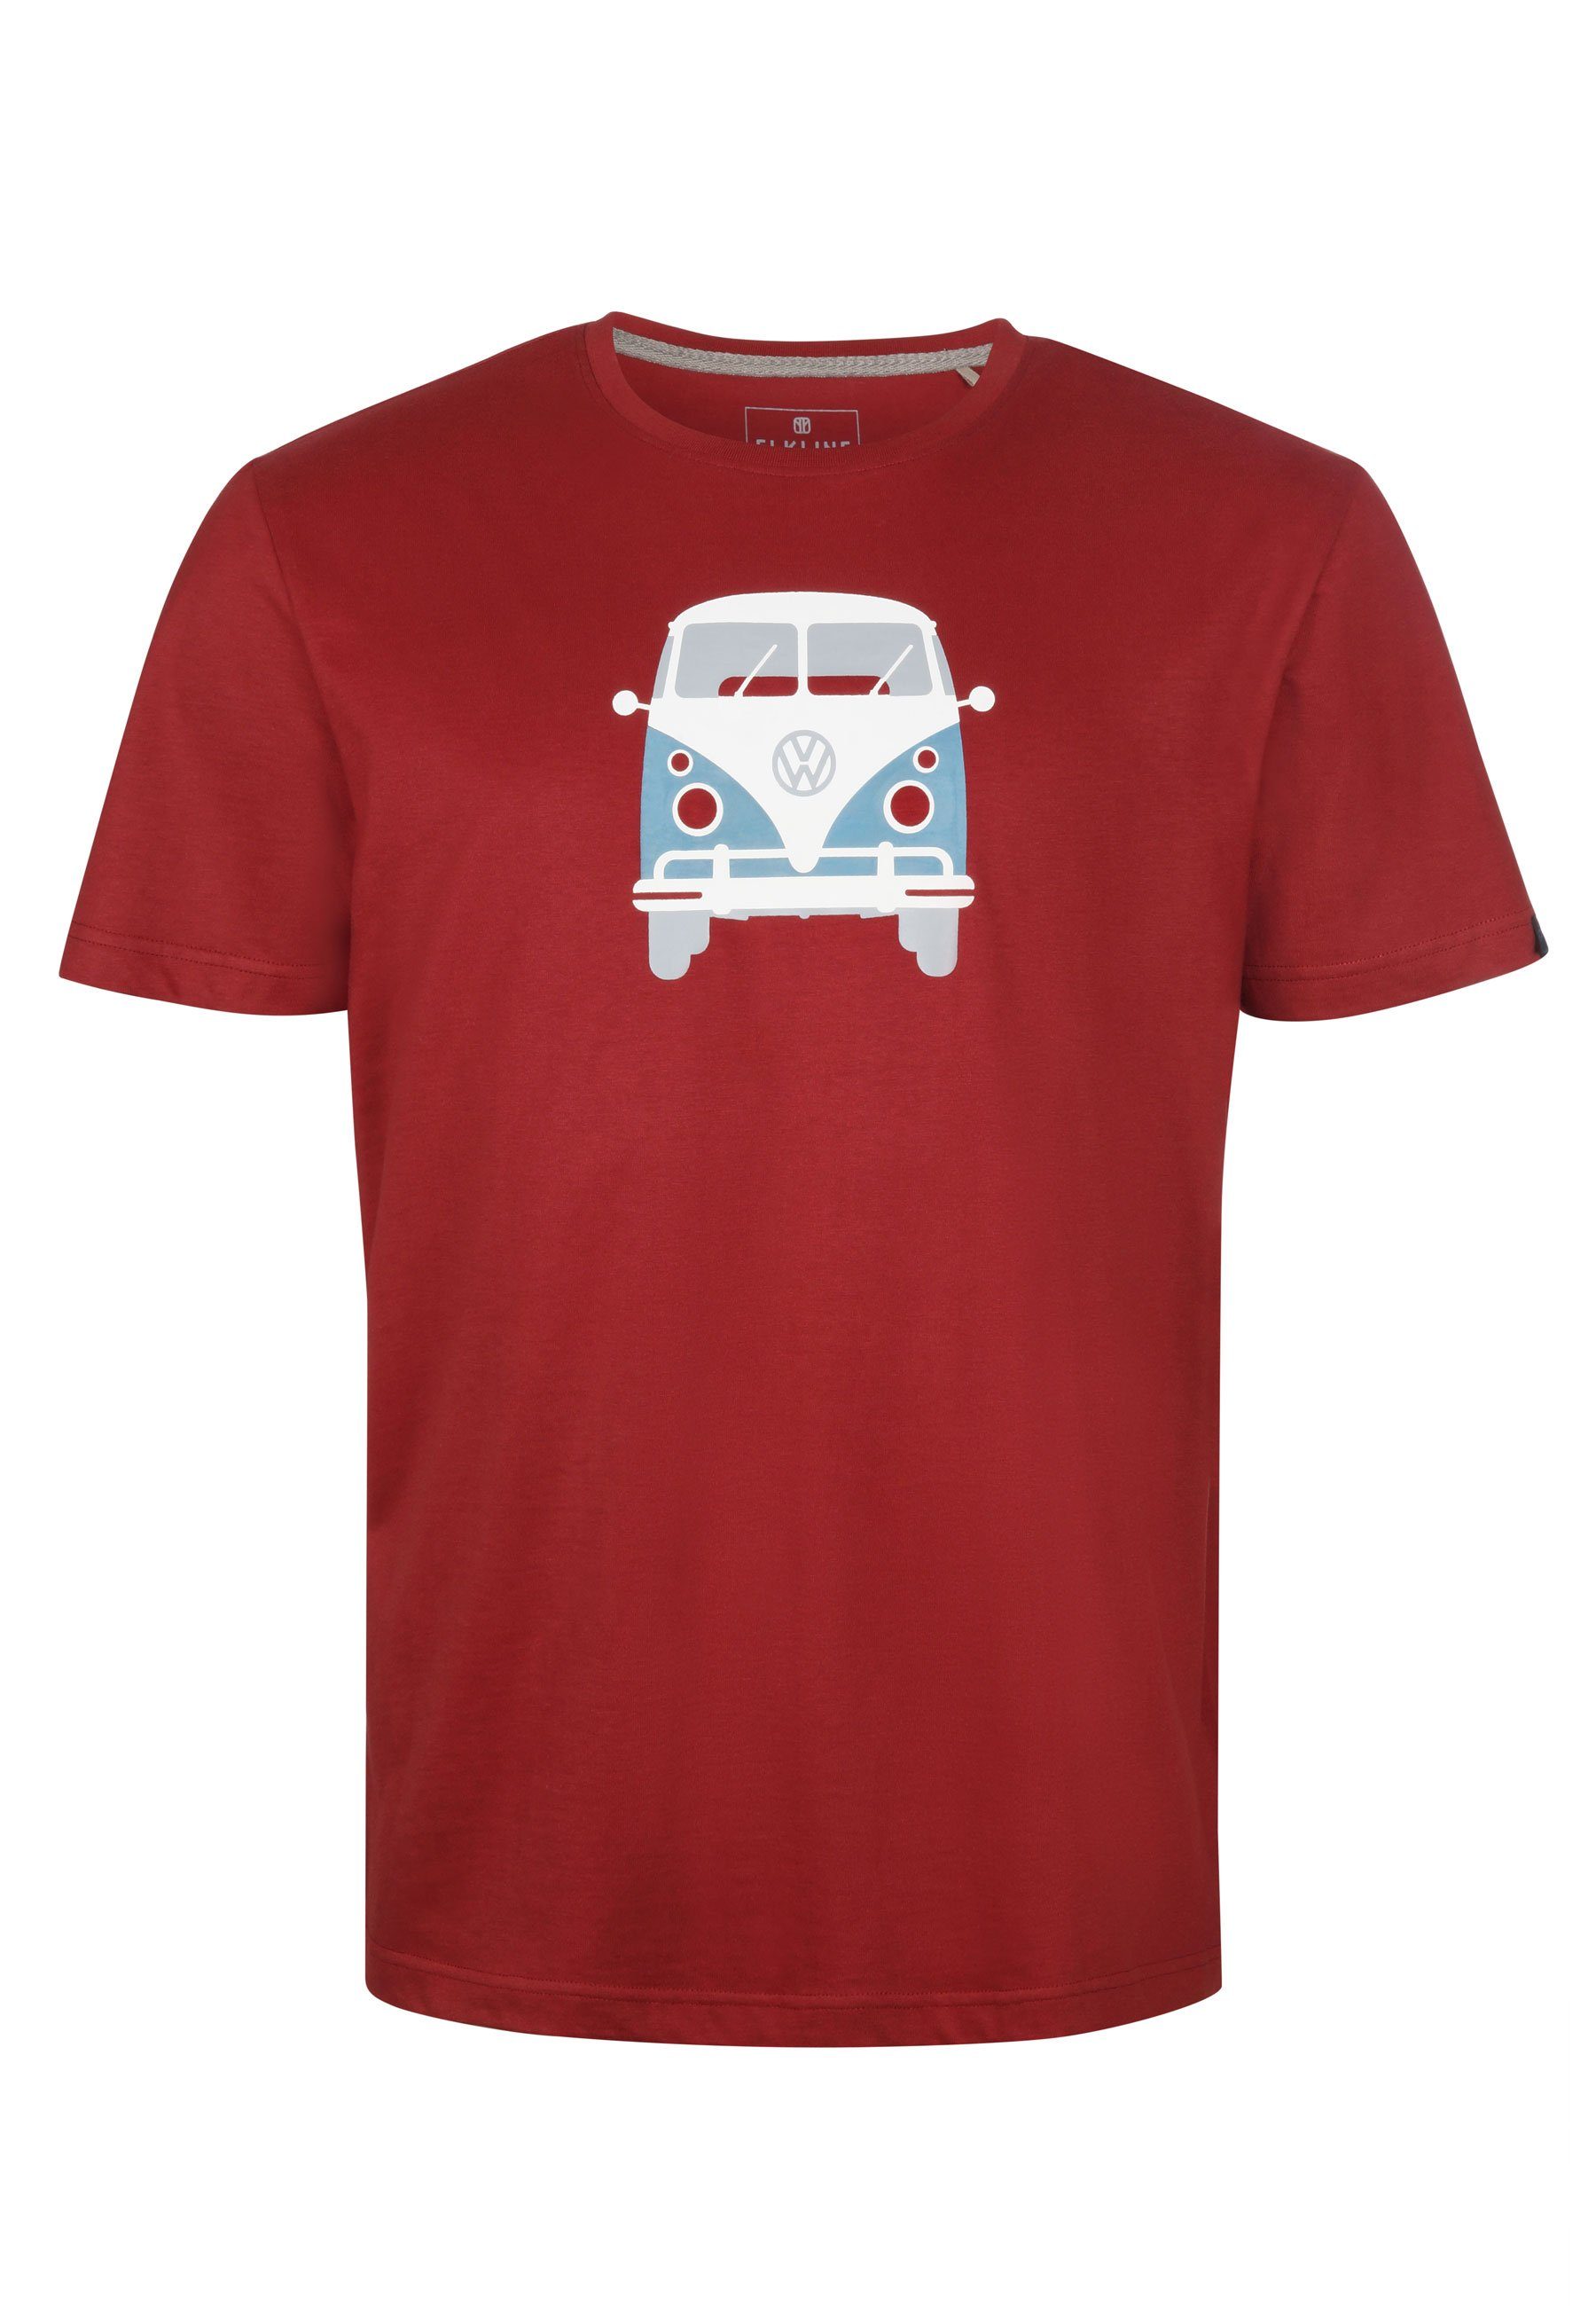 VW Bulli Print syrahred Brust Elkline Methusalem lizenzierter Rücken T-Shirt